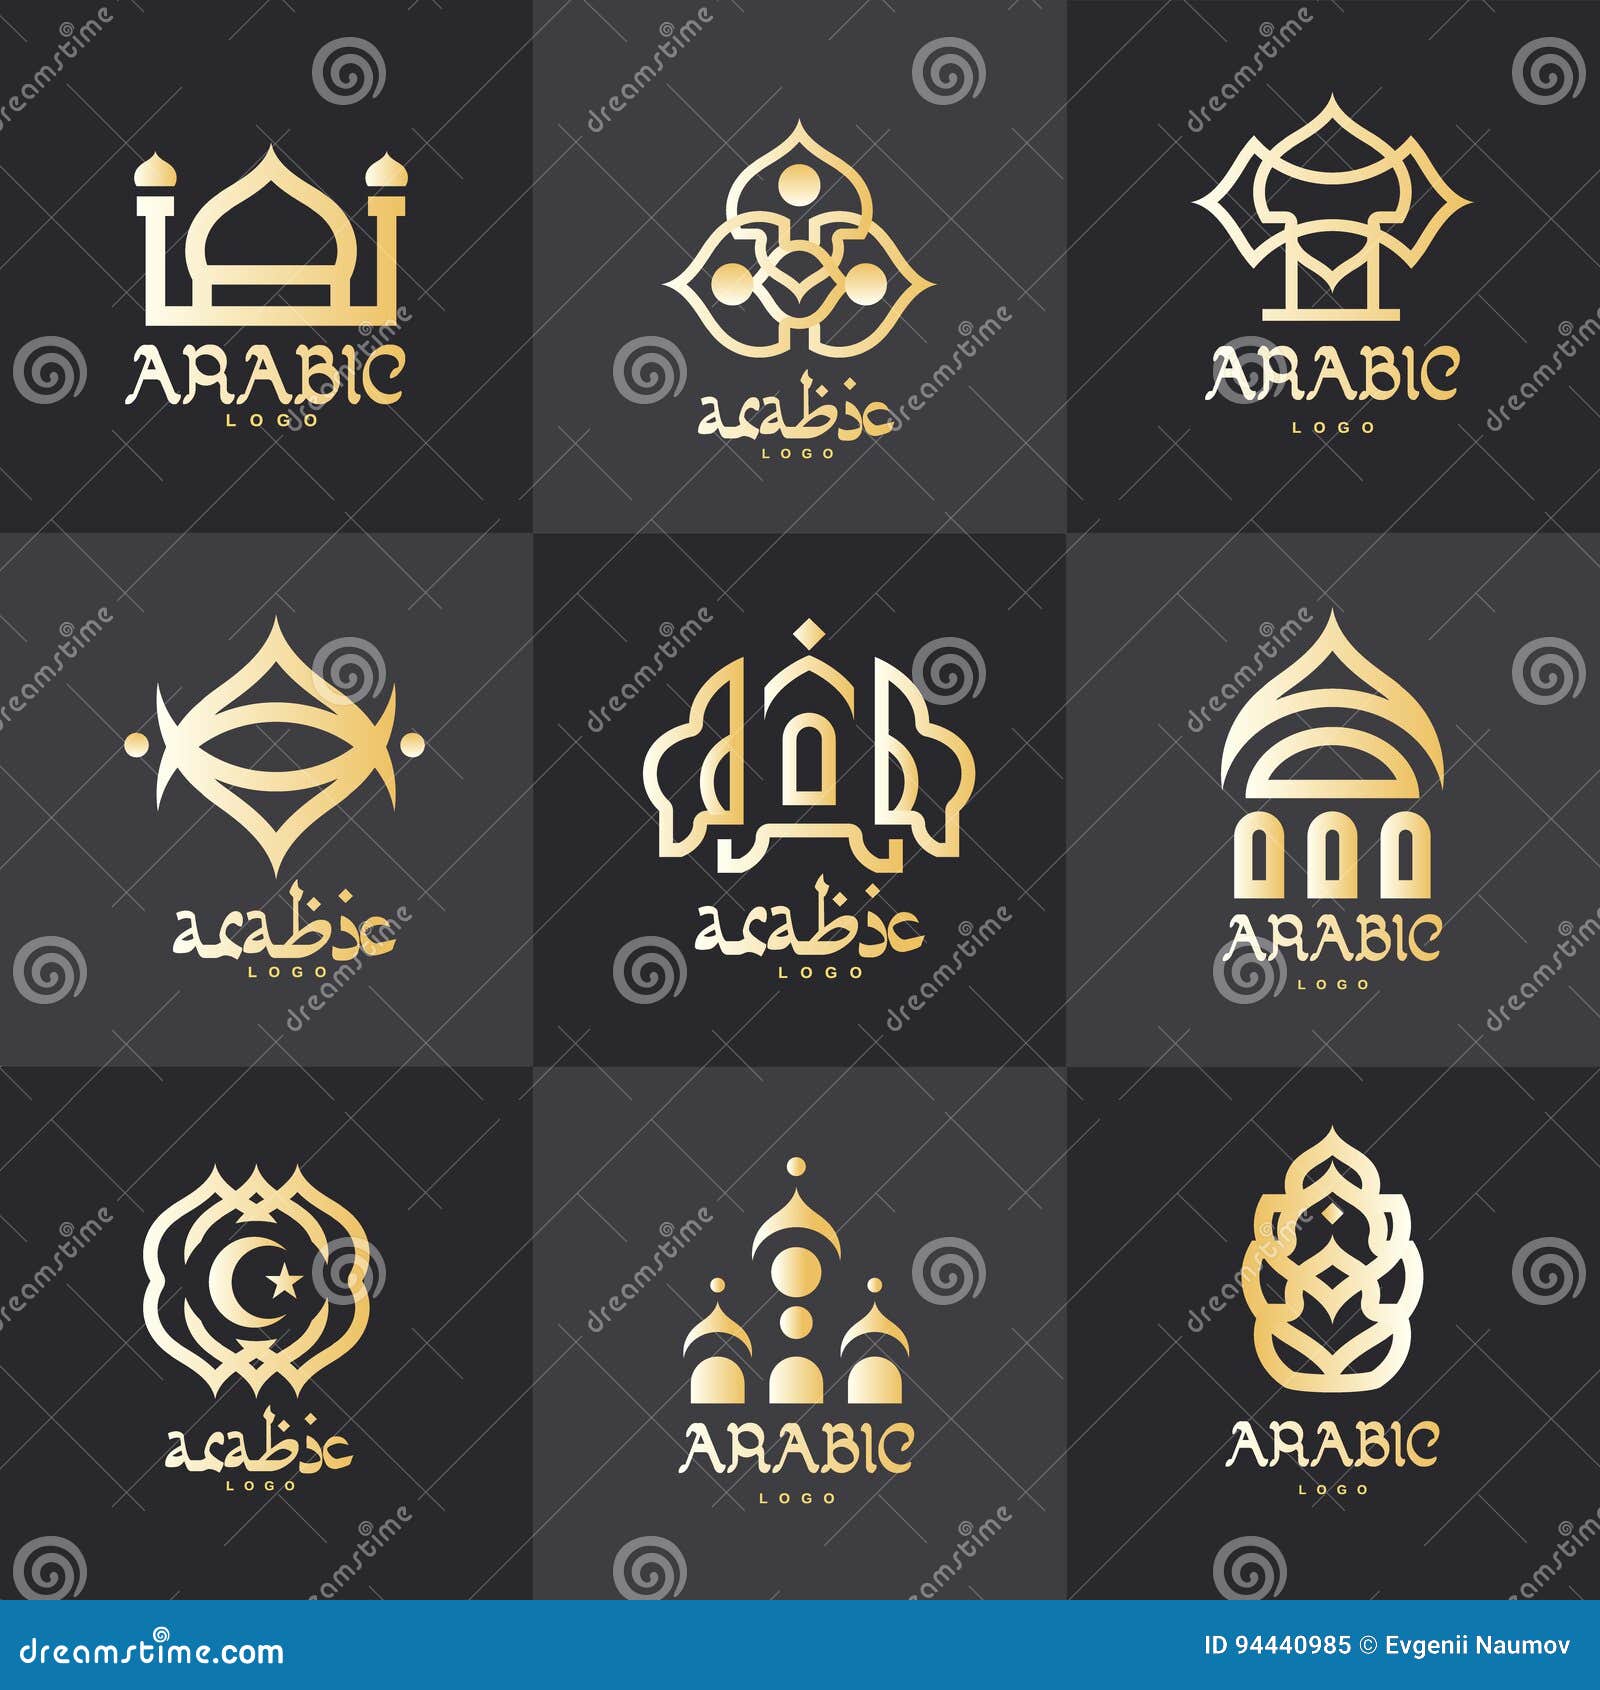 Arabic Logo Set, Architectural Elements Vector Illustrations Stock